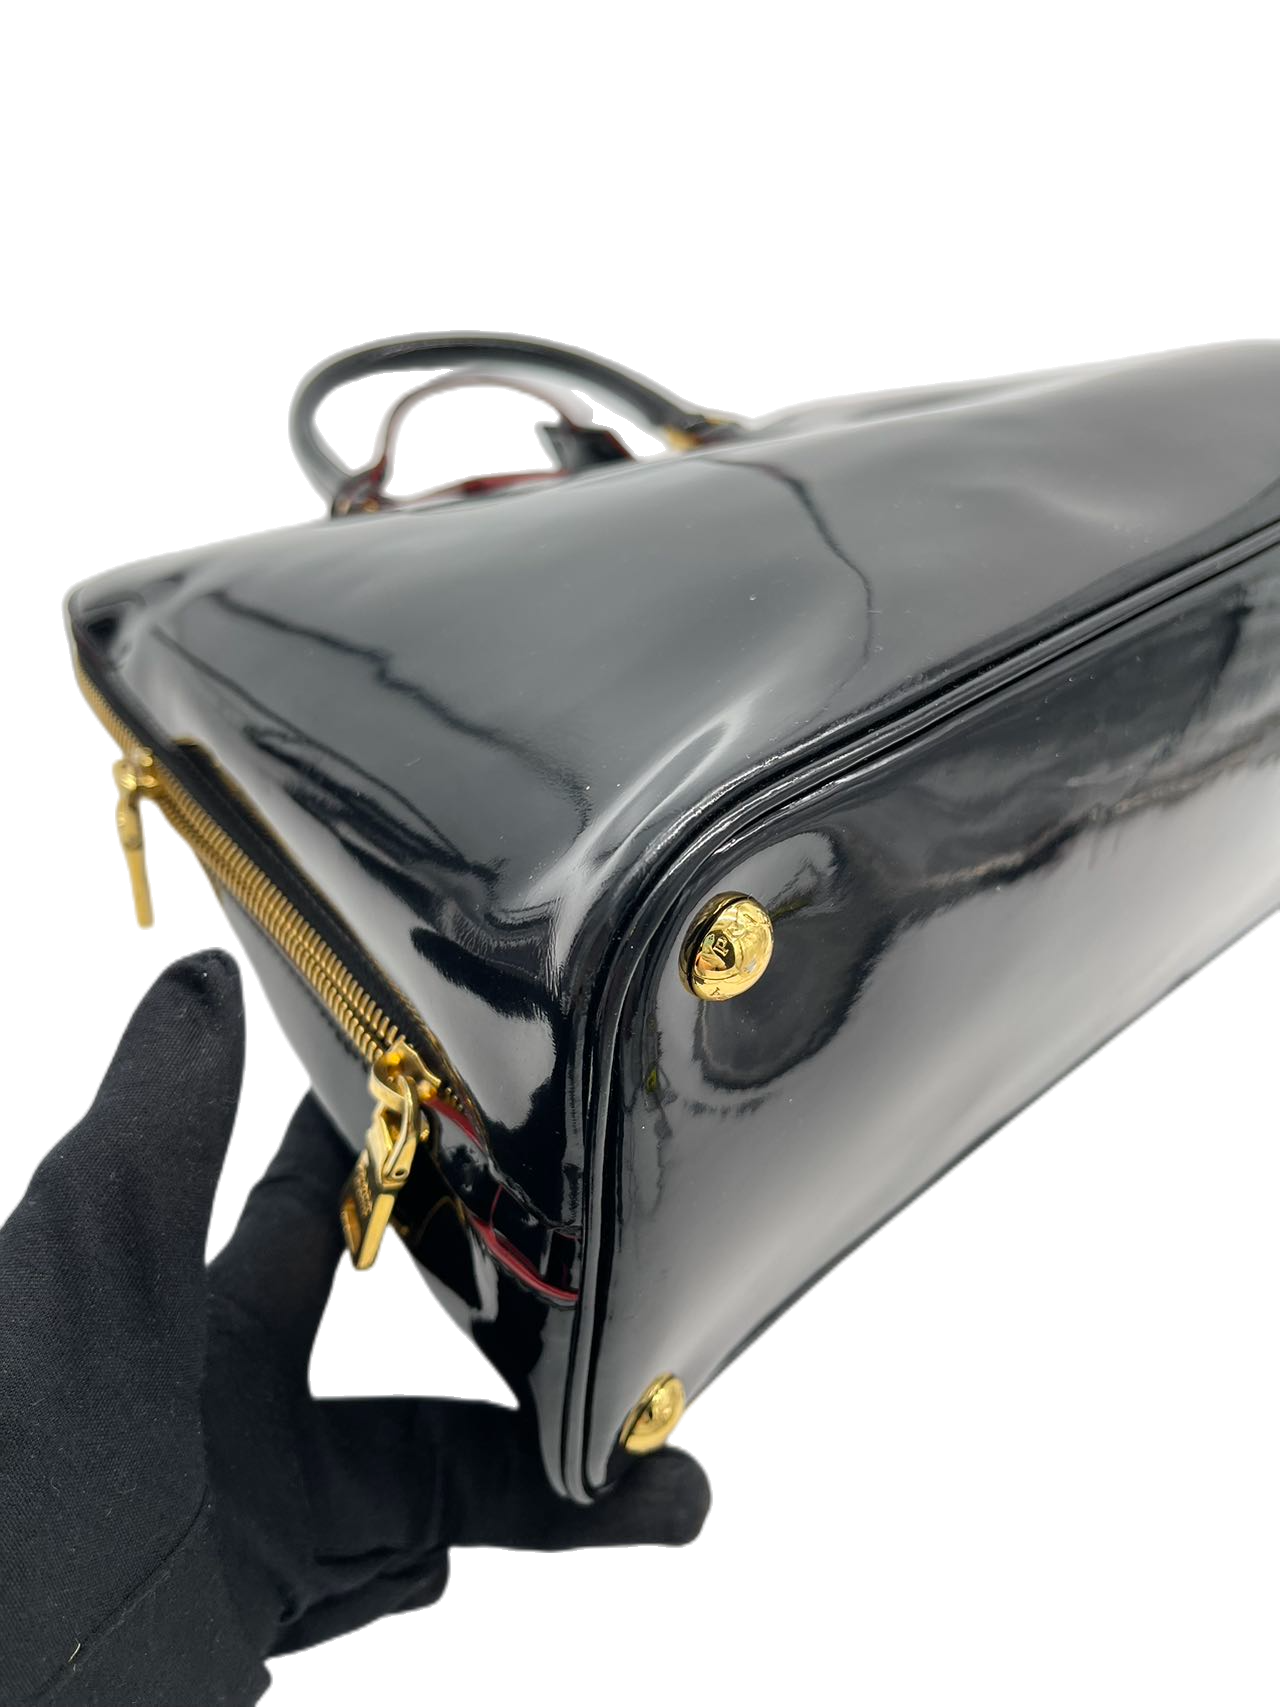 Preloved Prada Black Patent Leather Handbag Satchel